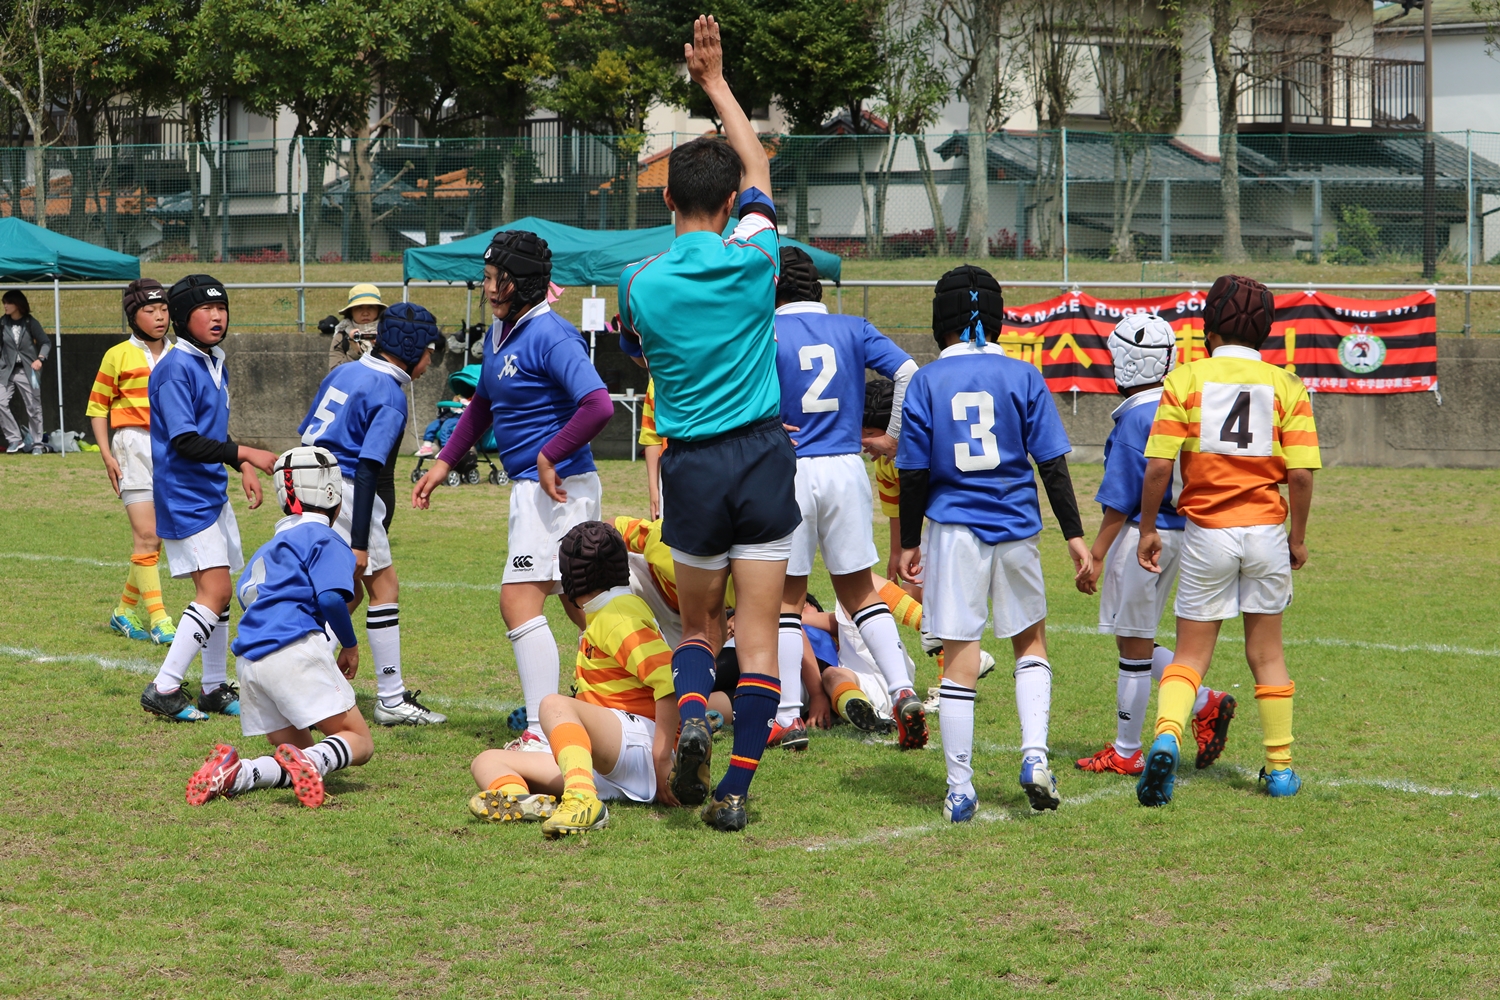 youngwave_kitakyusyu_rugby_school_kasugahai2016070.JPG